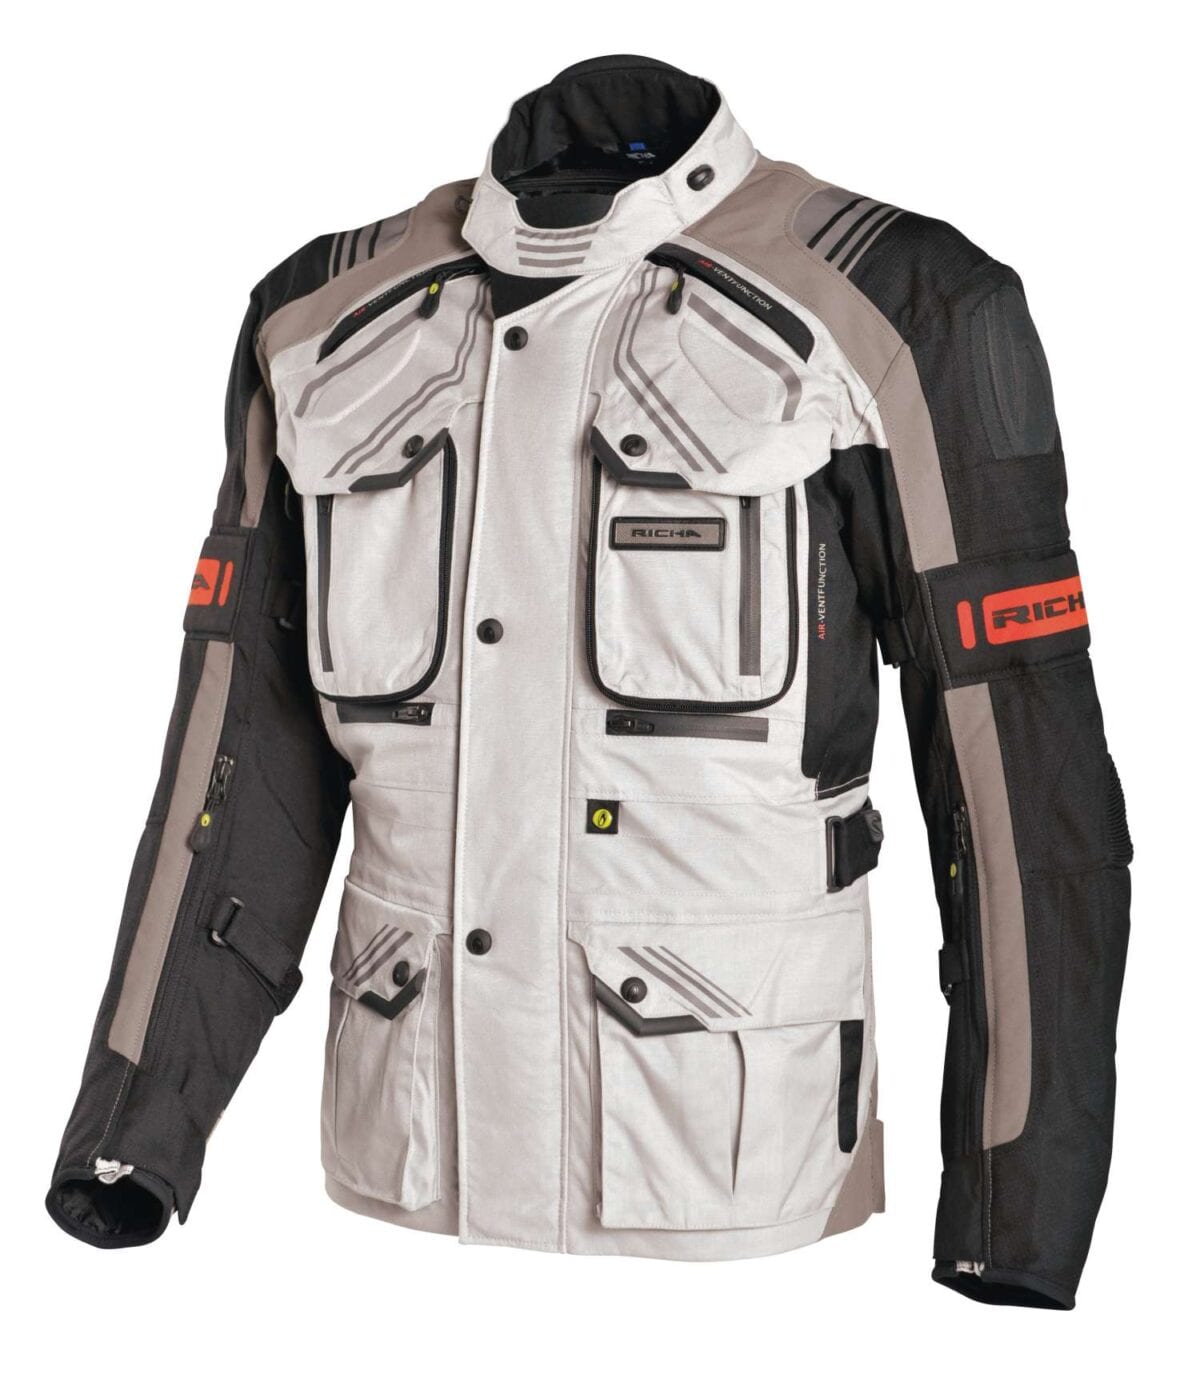 Richa motorcycle clothing